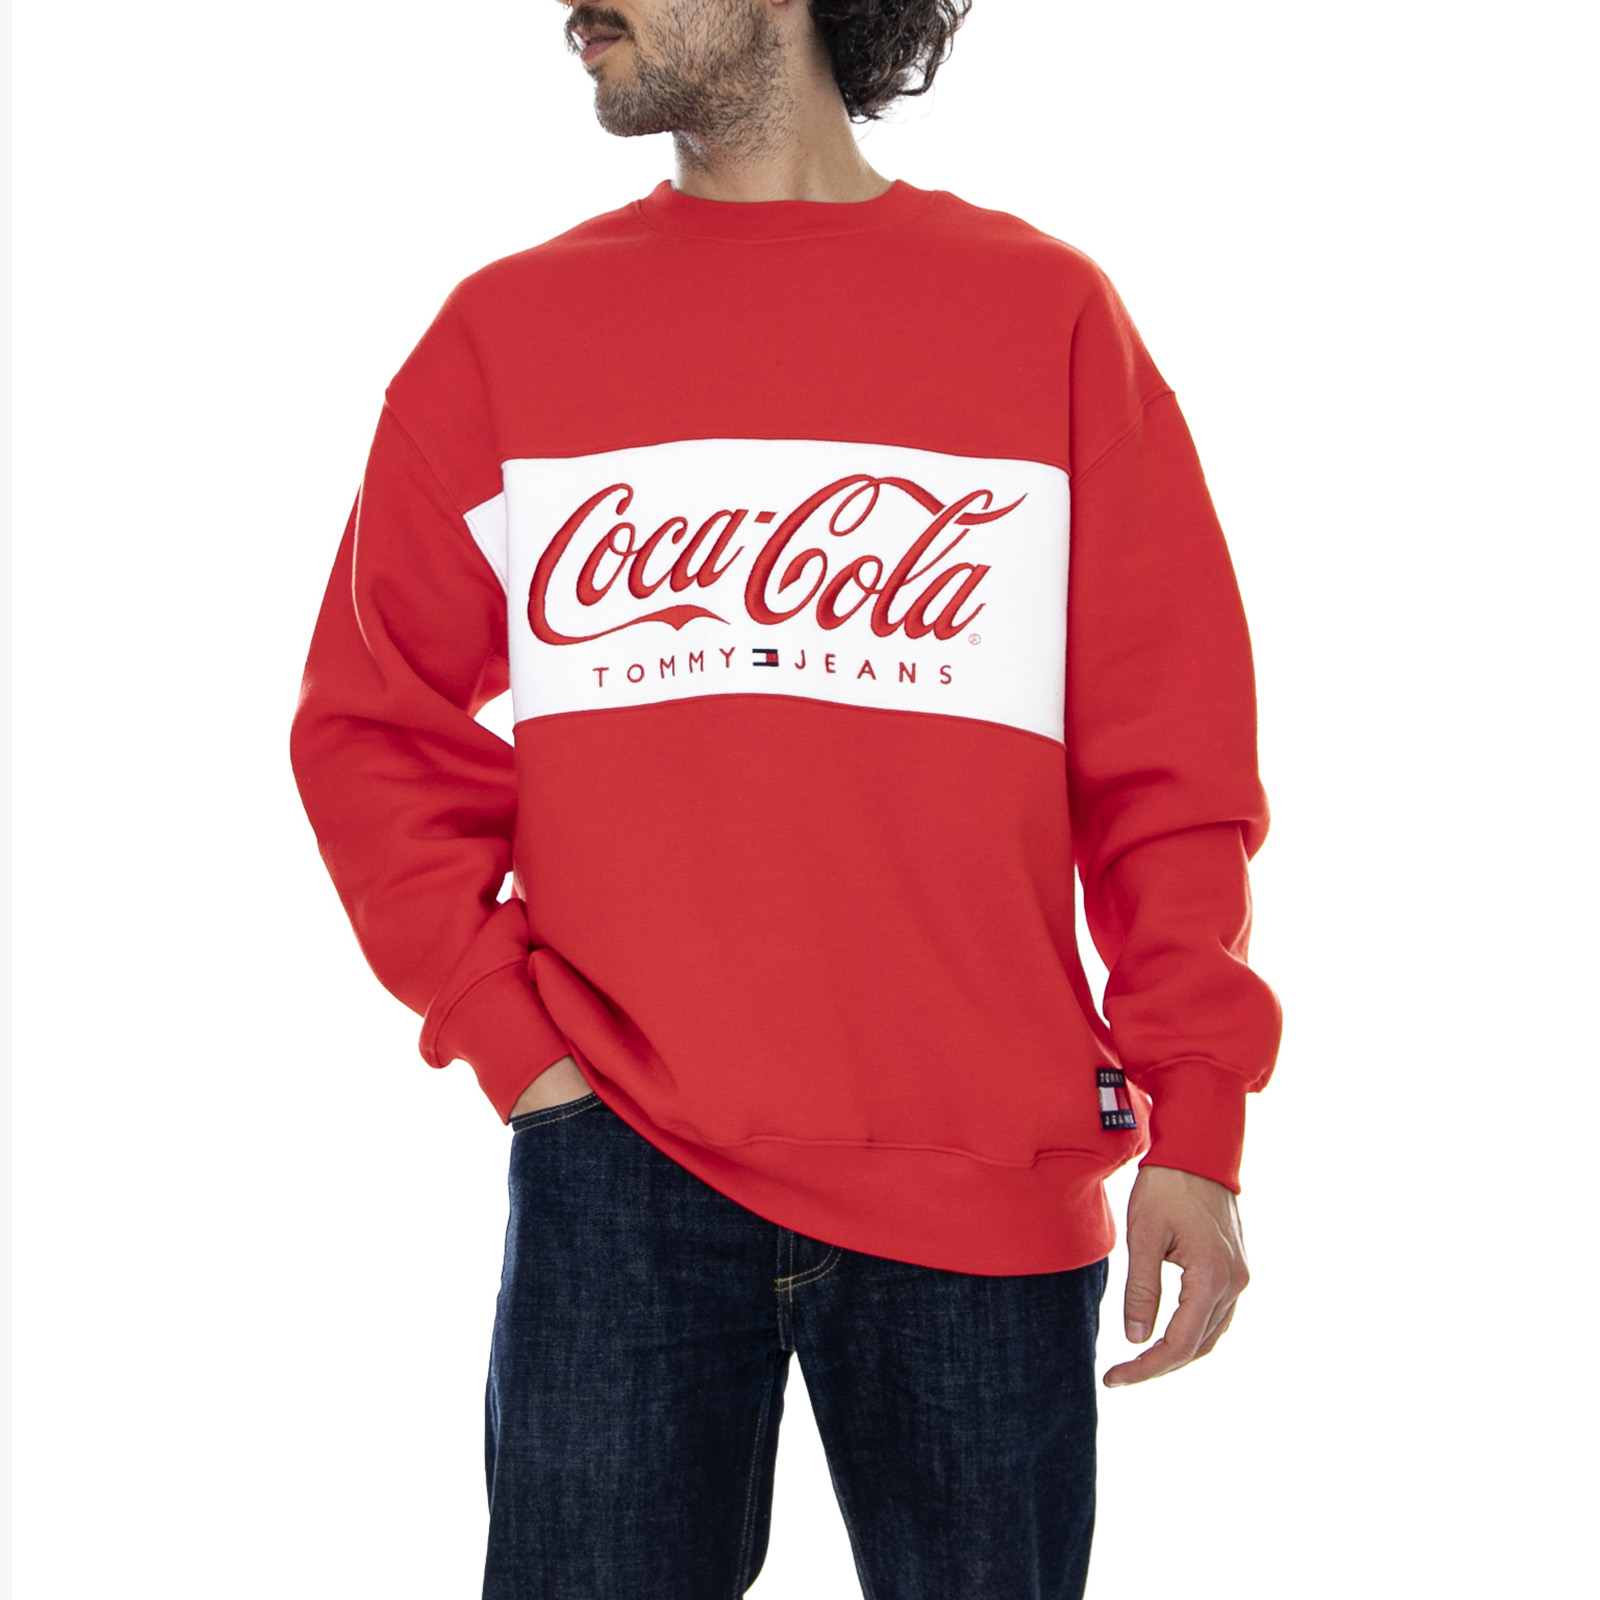 coca cola tommy hilfiger sweatshirt